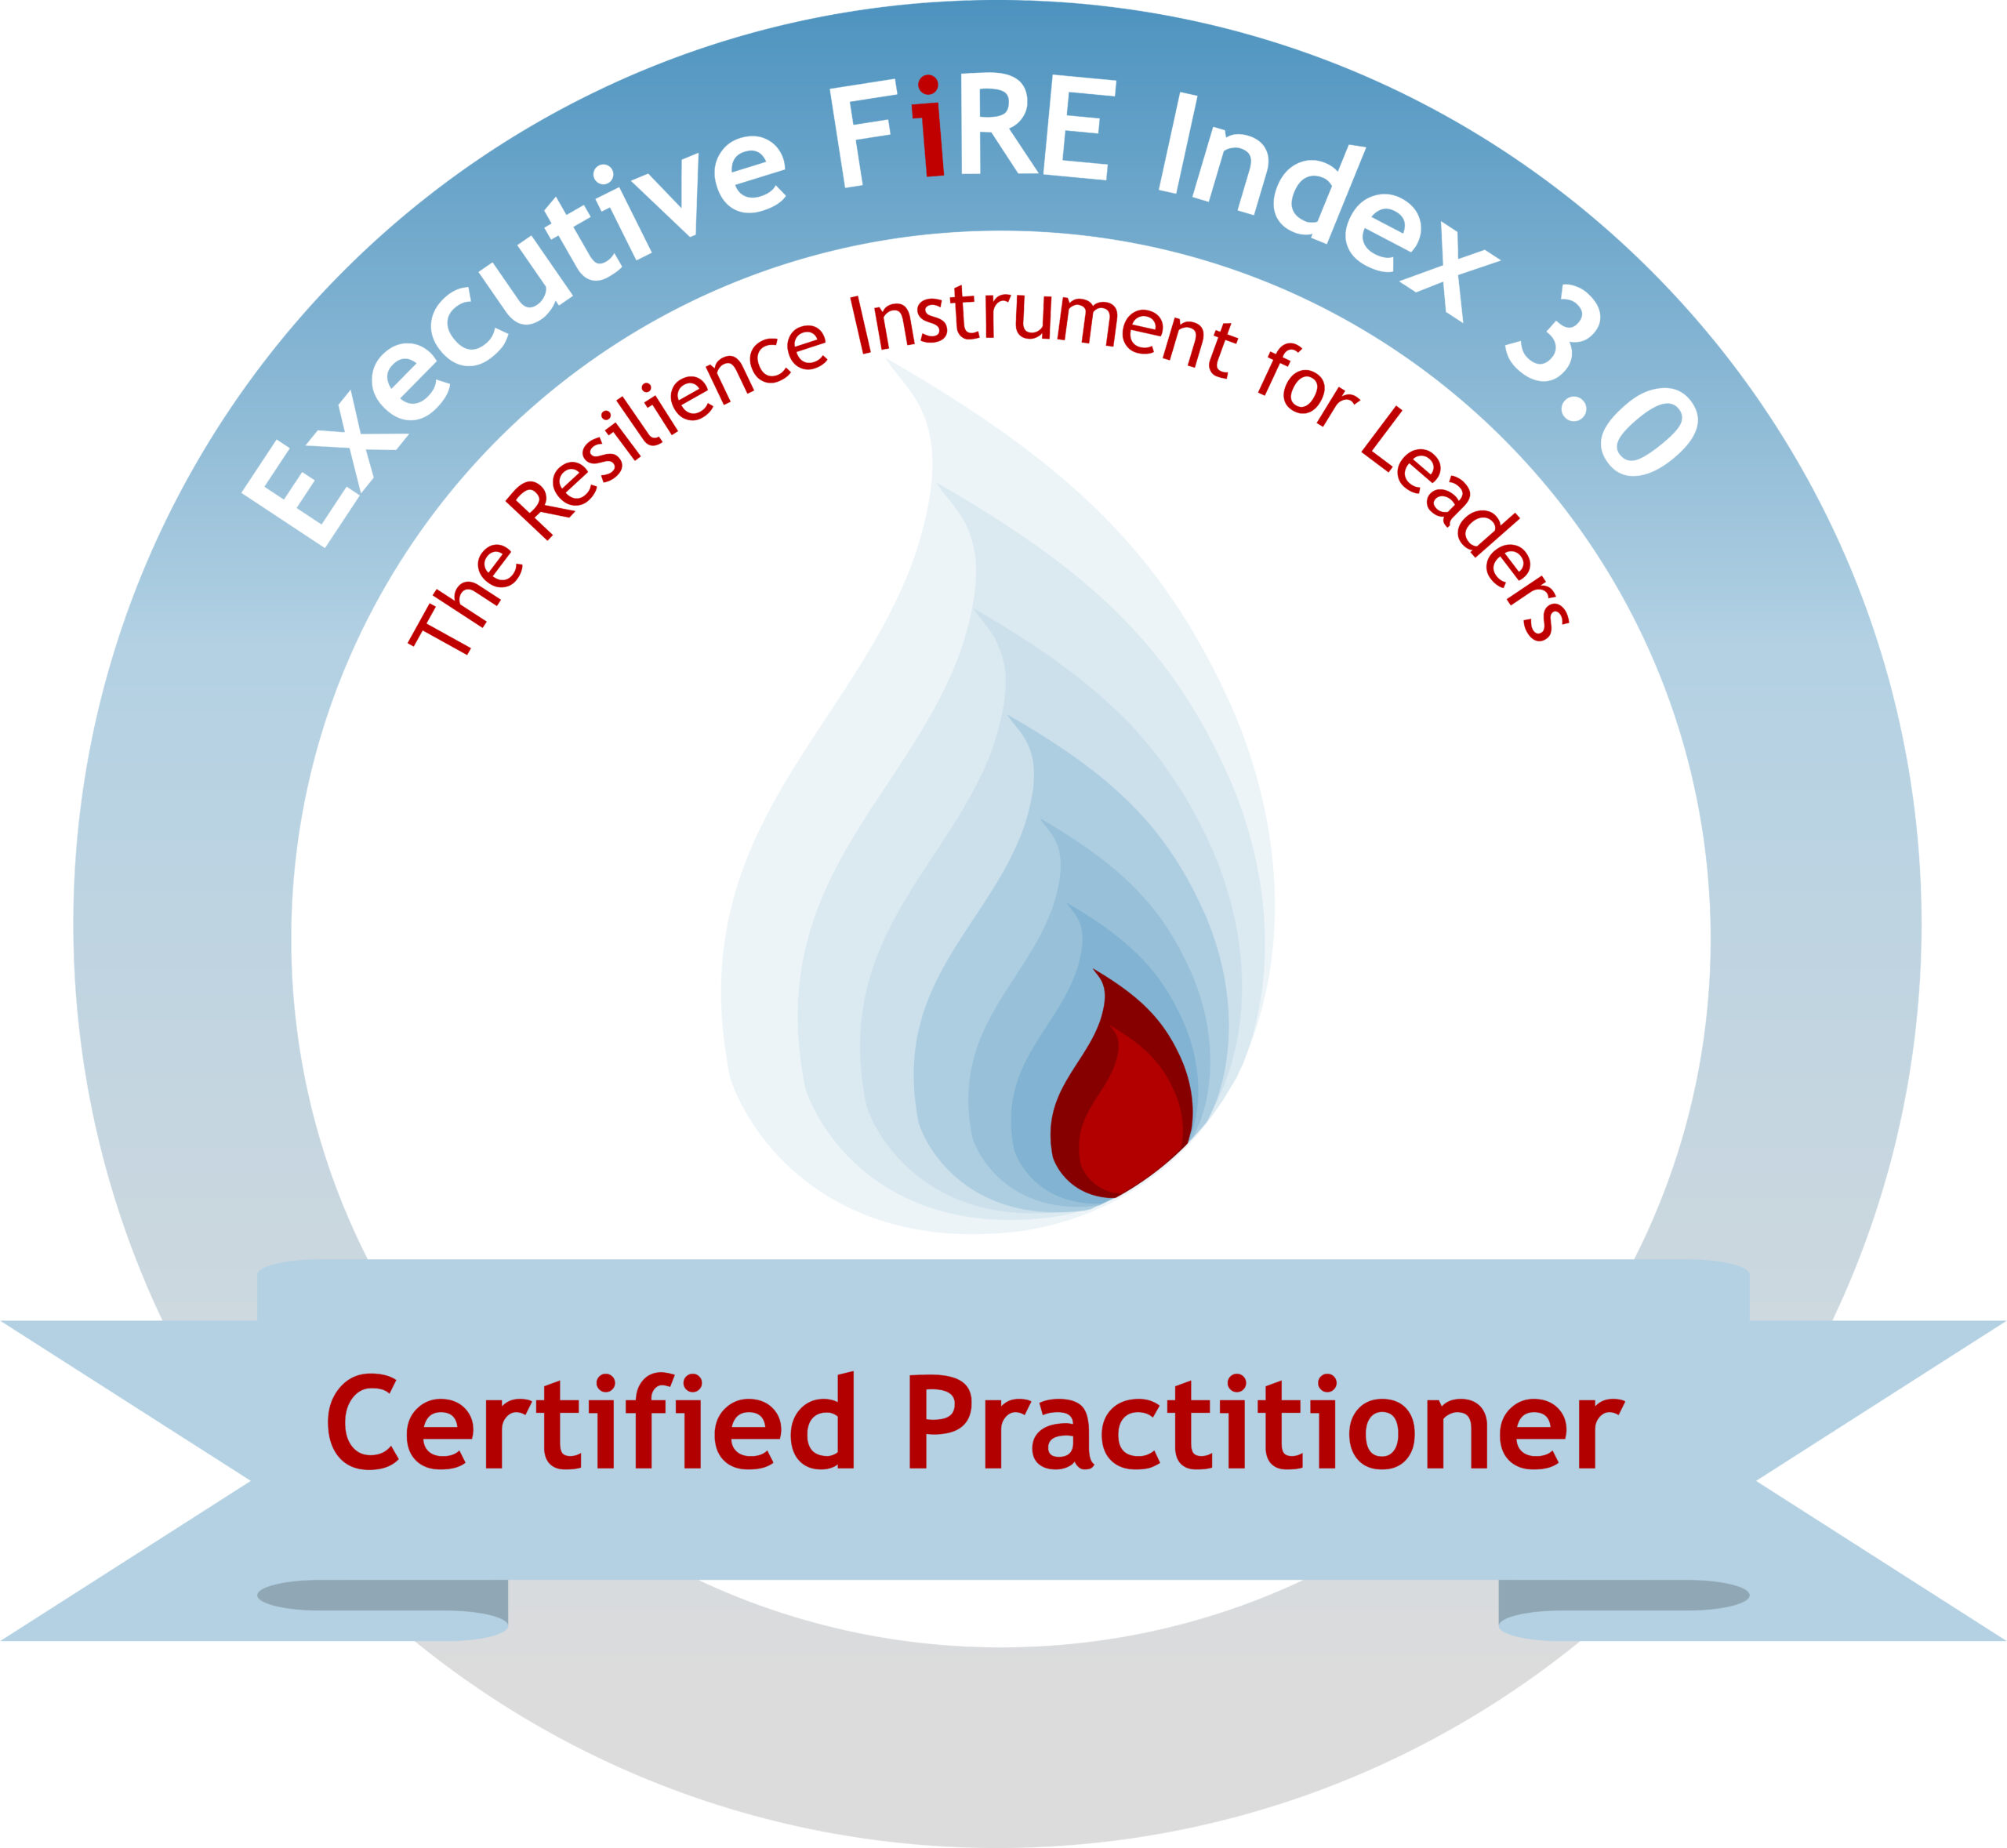 Executive FiRE Index